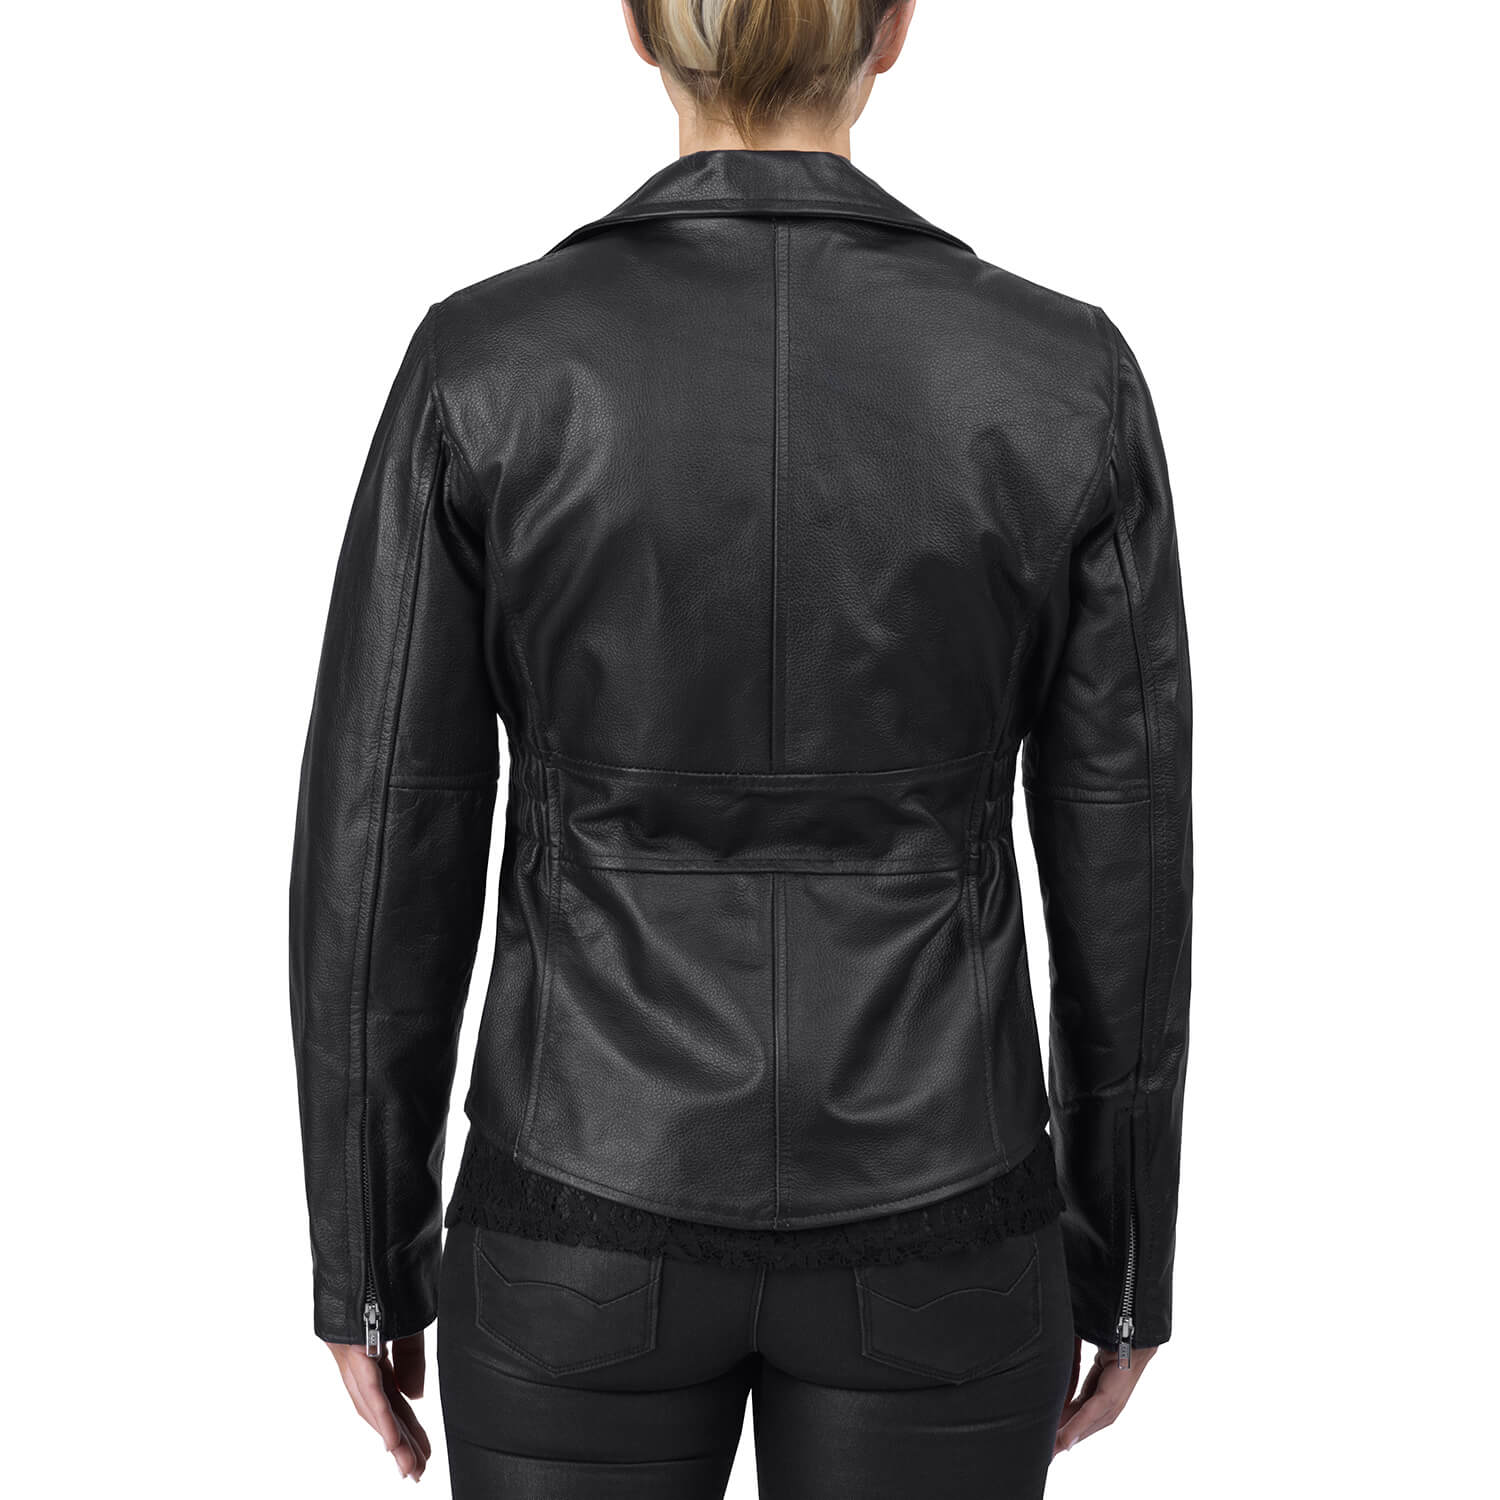 Get Women's Cruise Leather Motorcycle Jacket - Viking Cycle